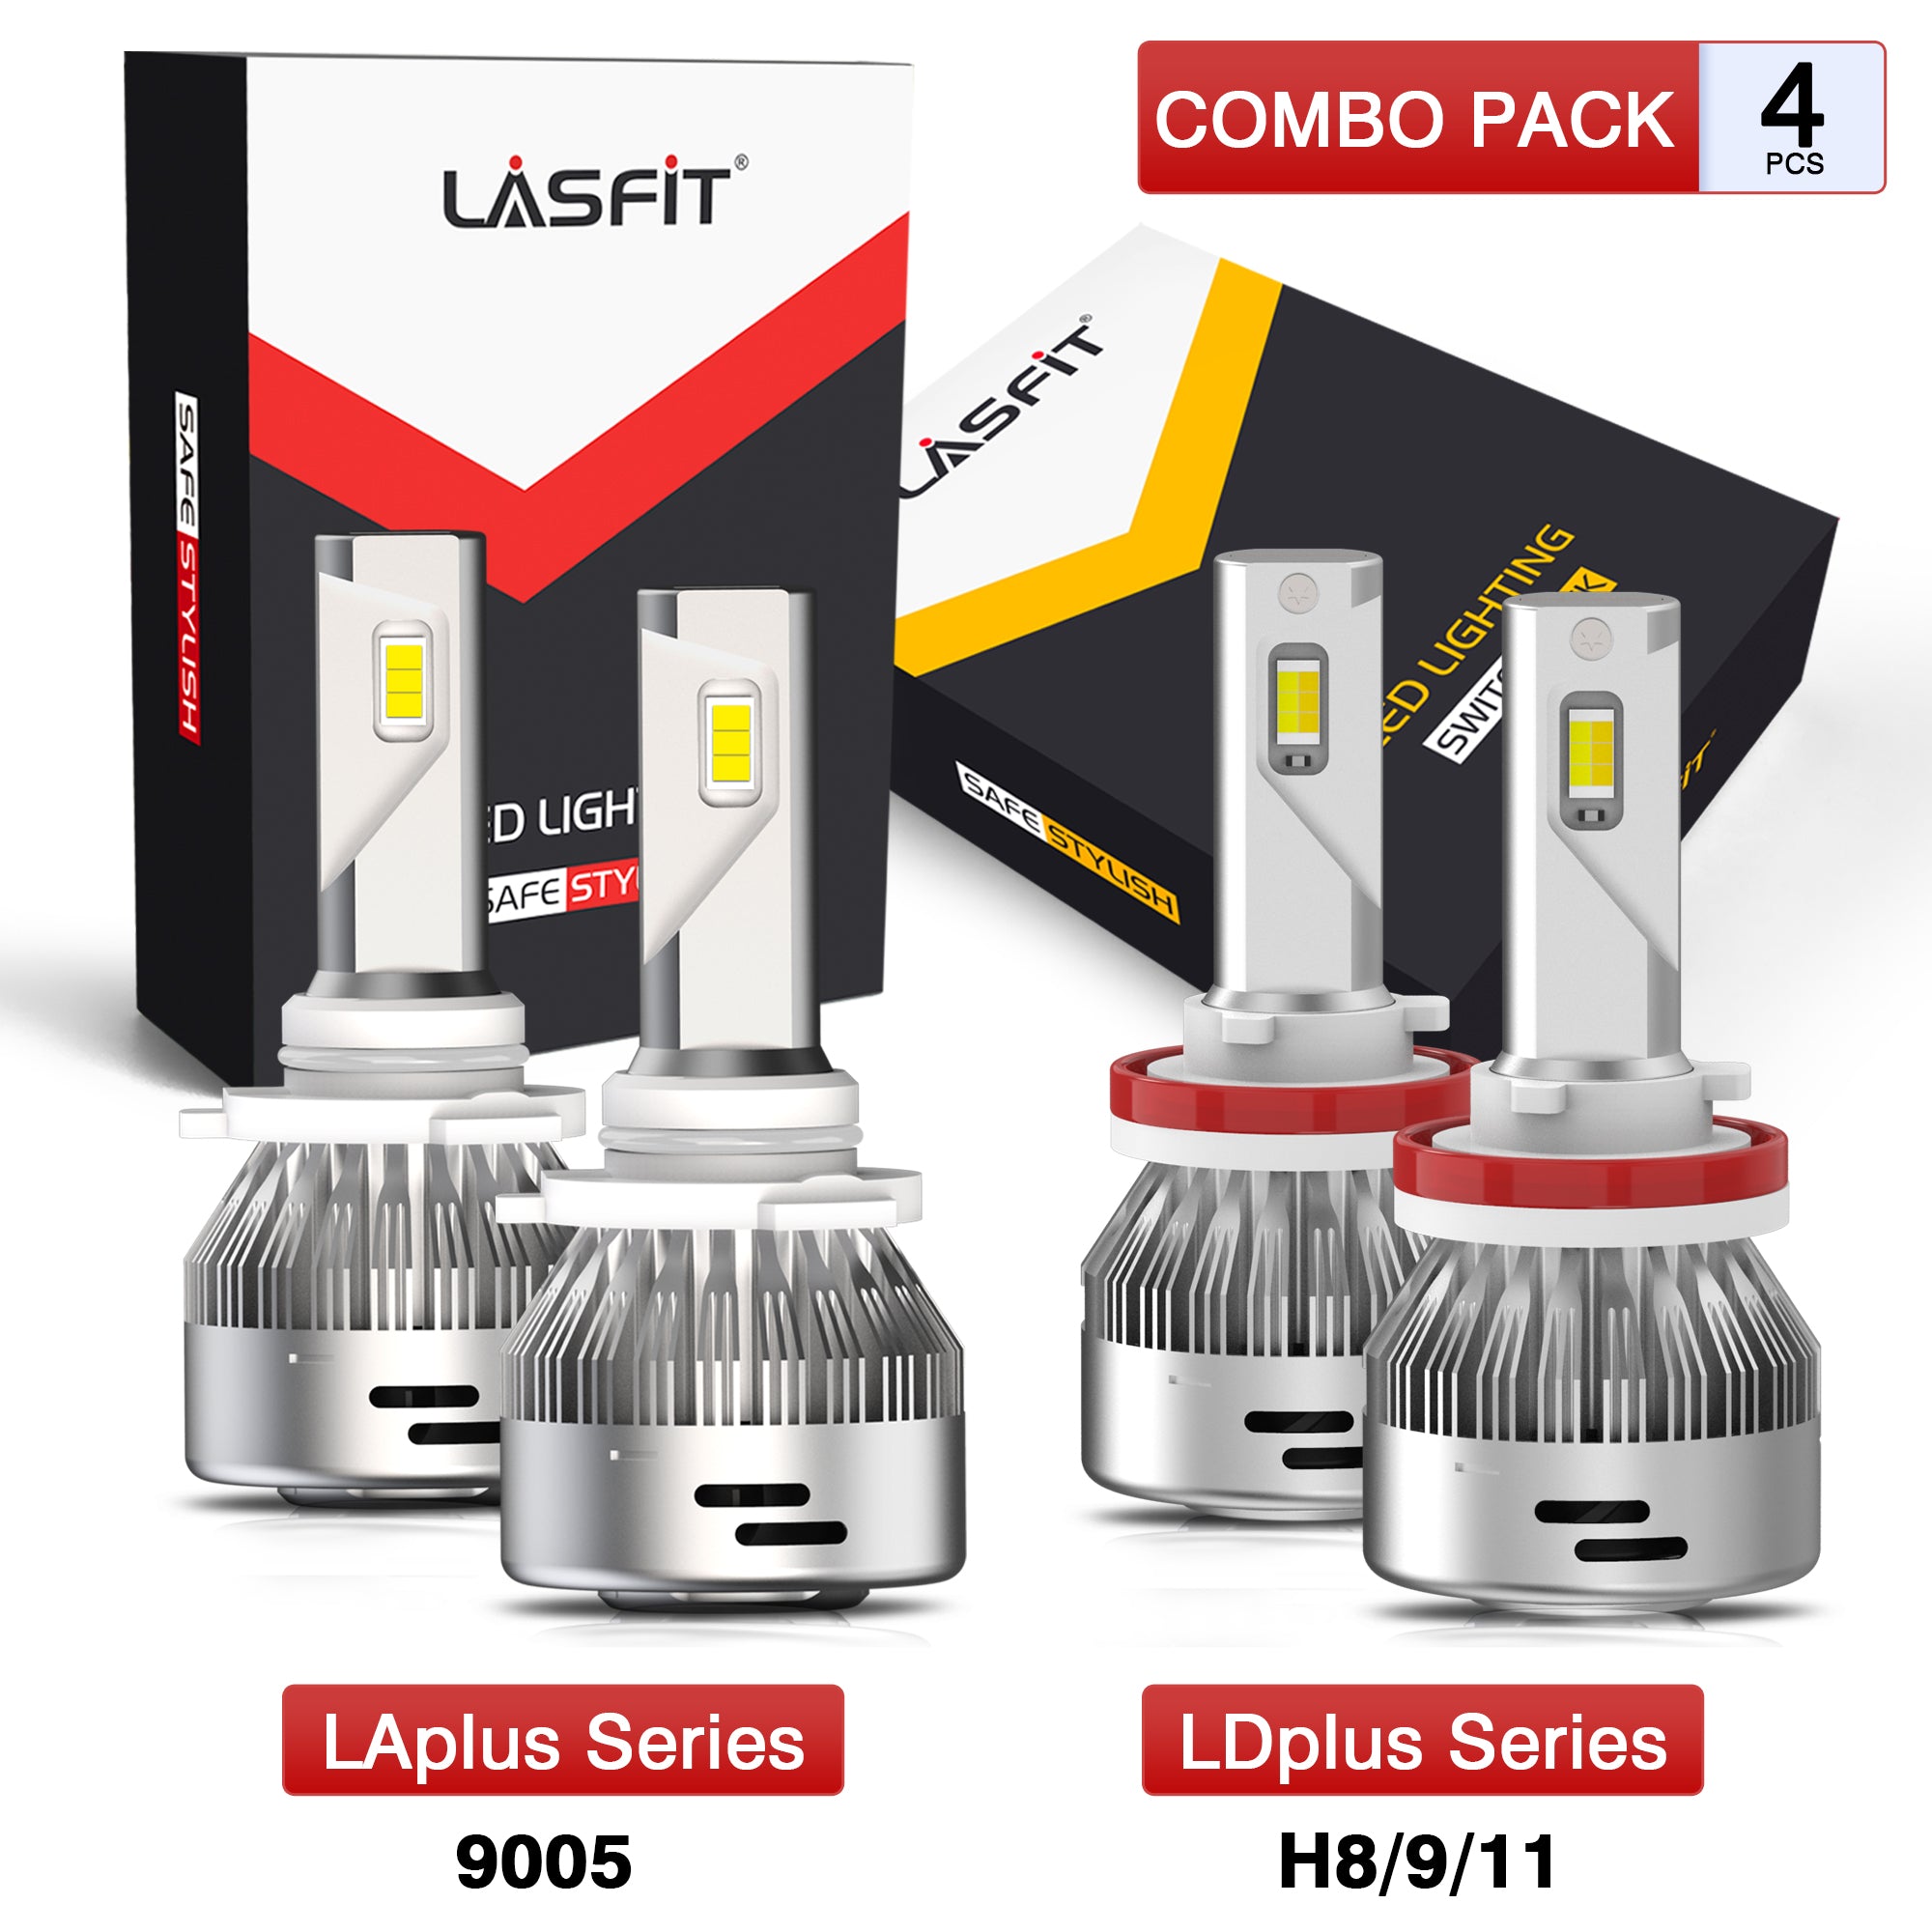  LASFIT H7 LED Light Bulbs Dual Color Switchback 6000K